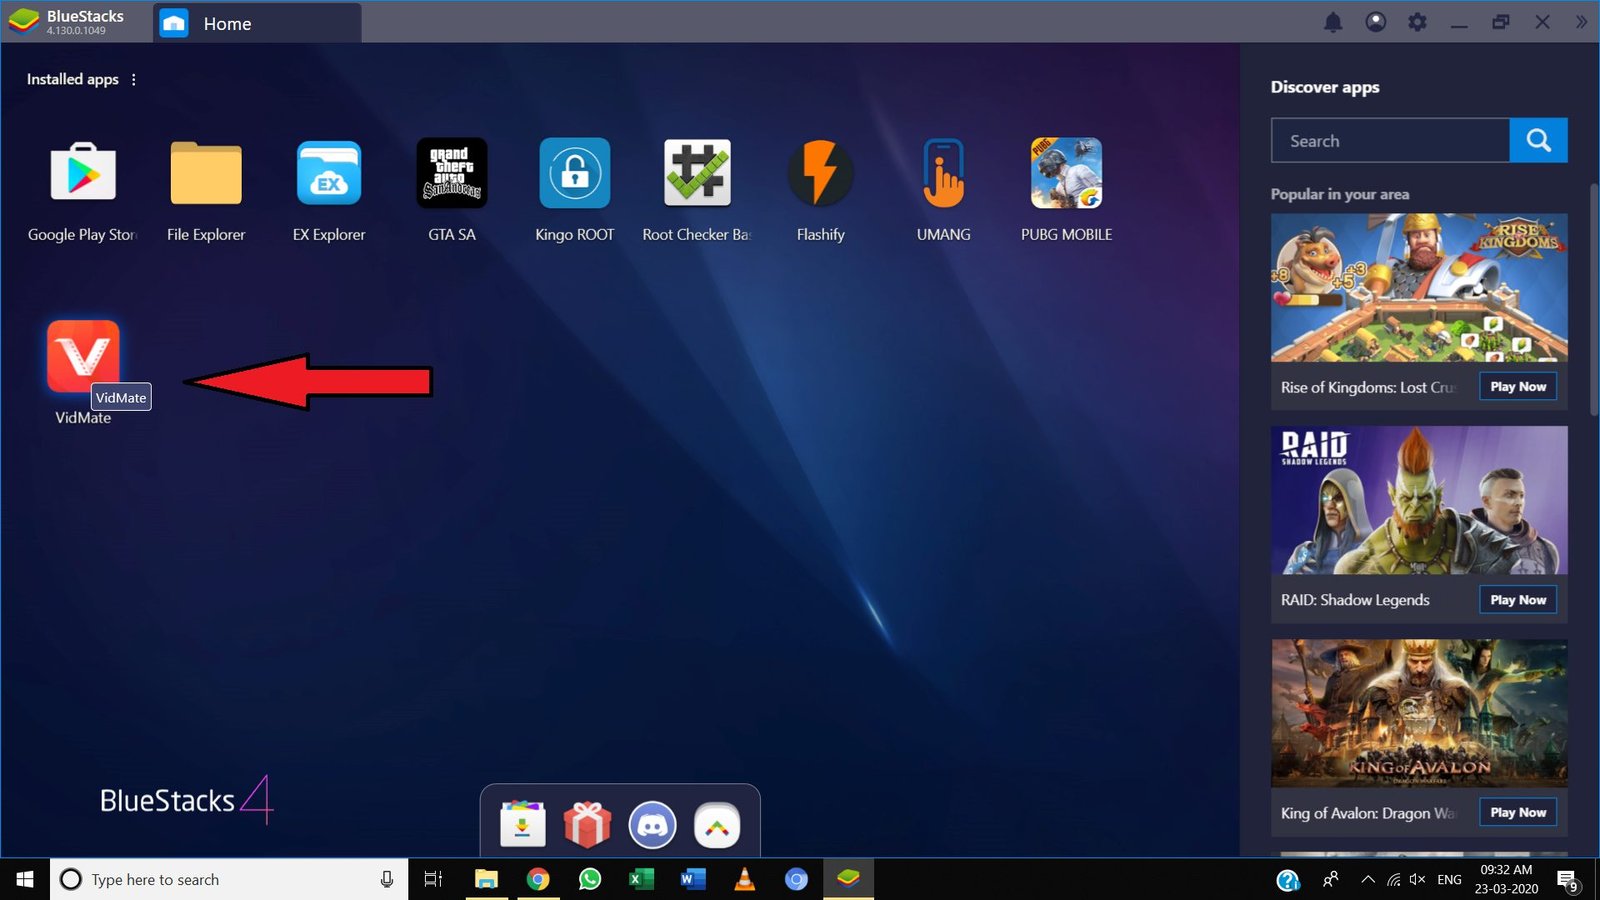 vidmate download laptop windows 10